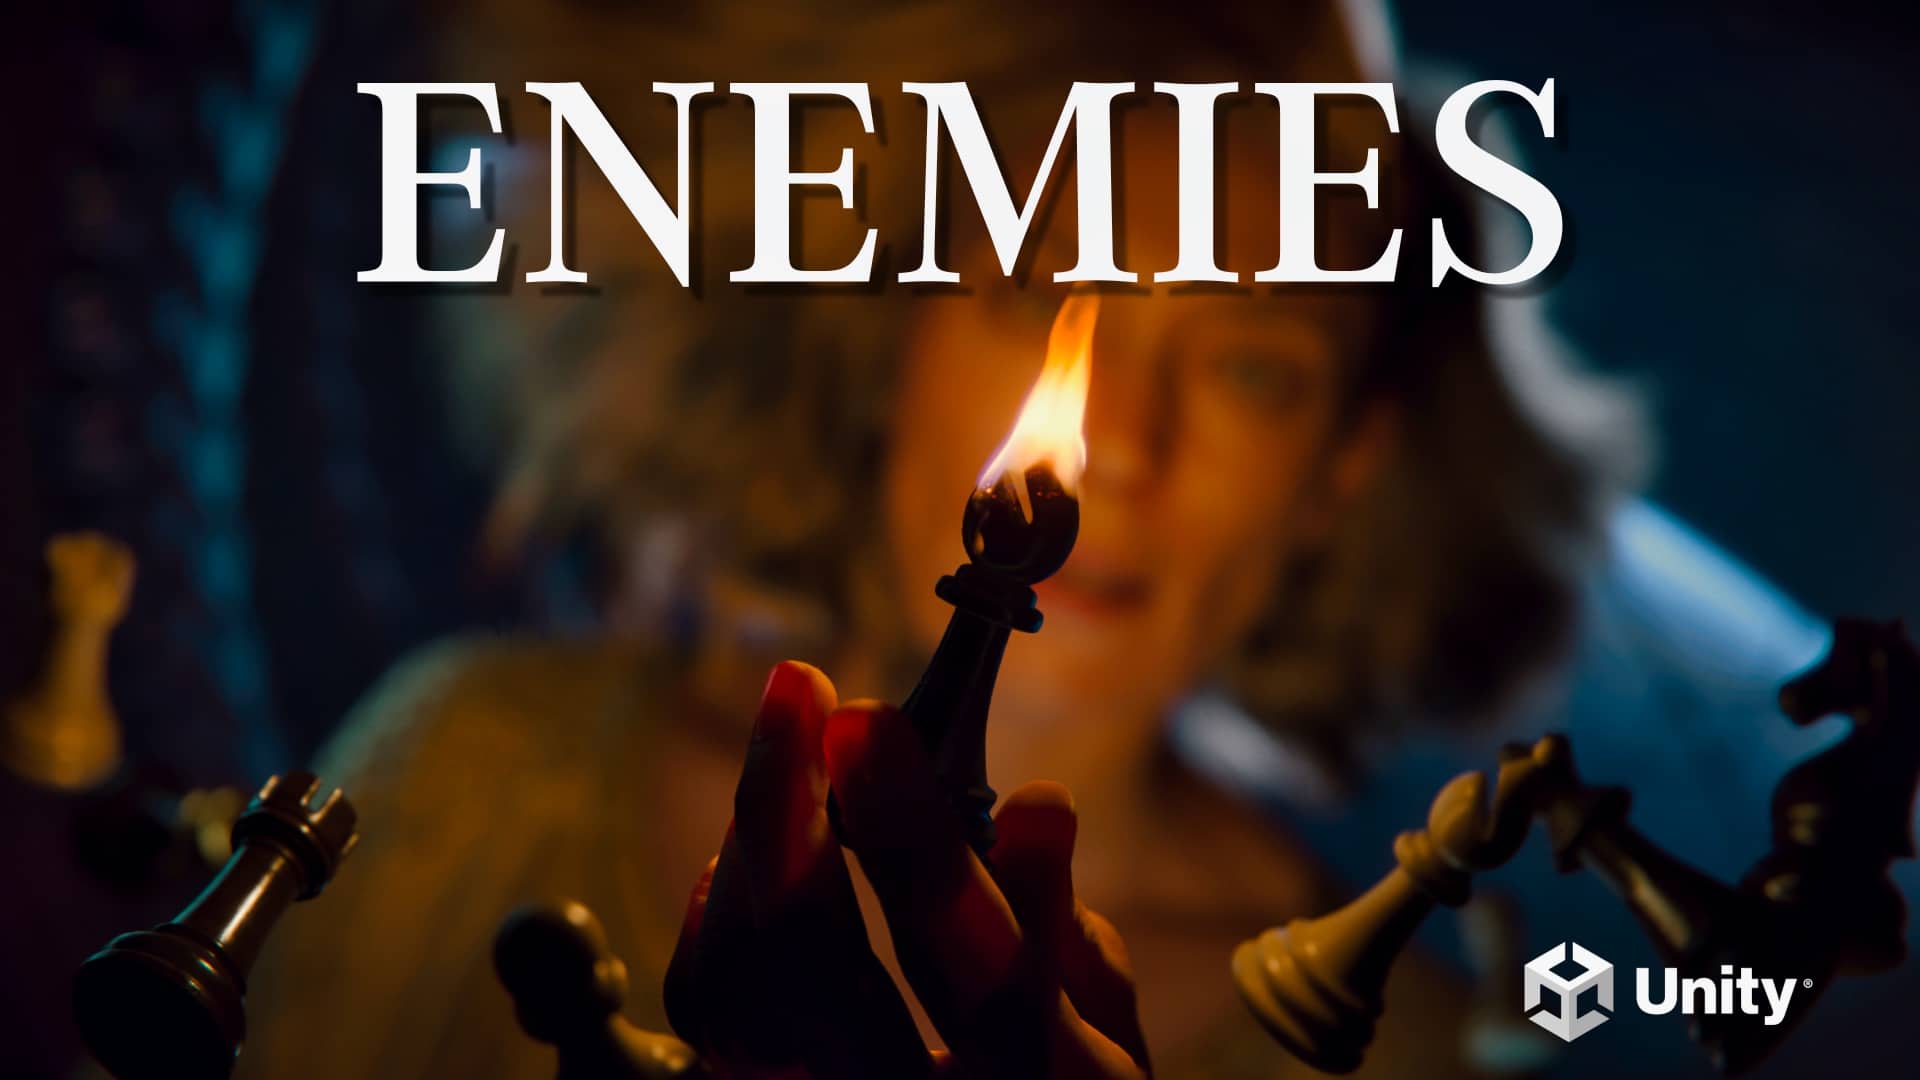 Make enemies